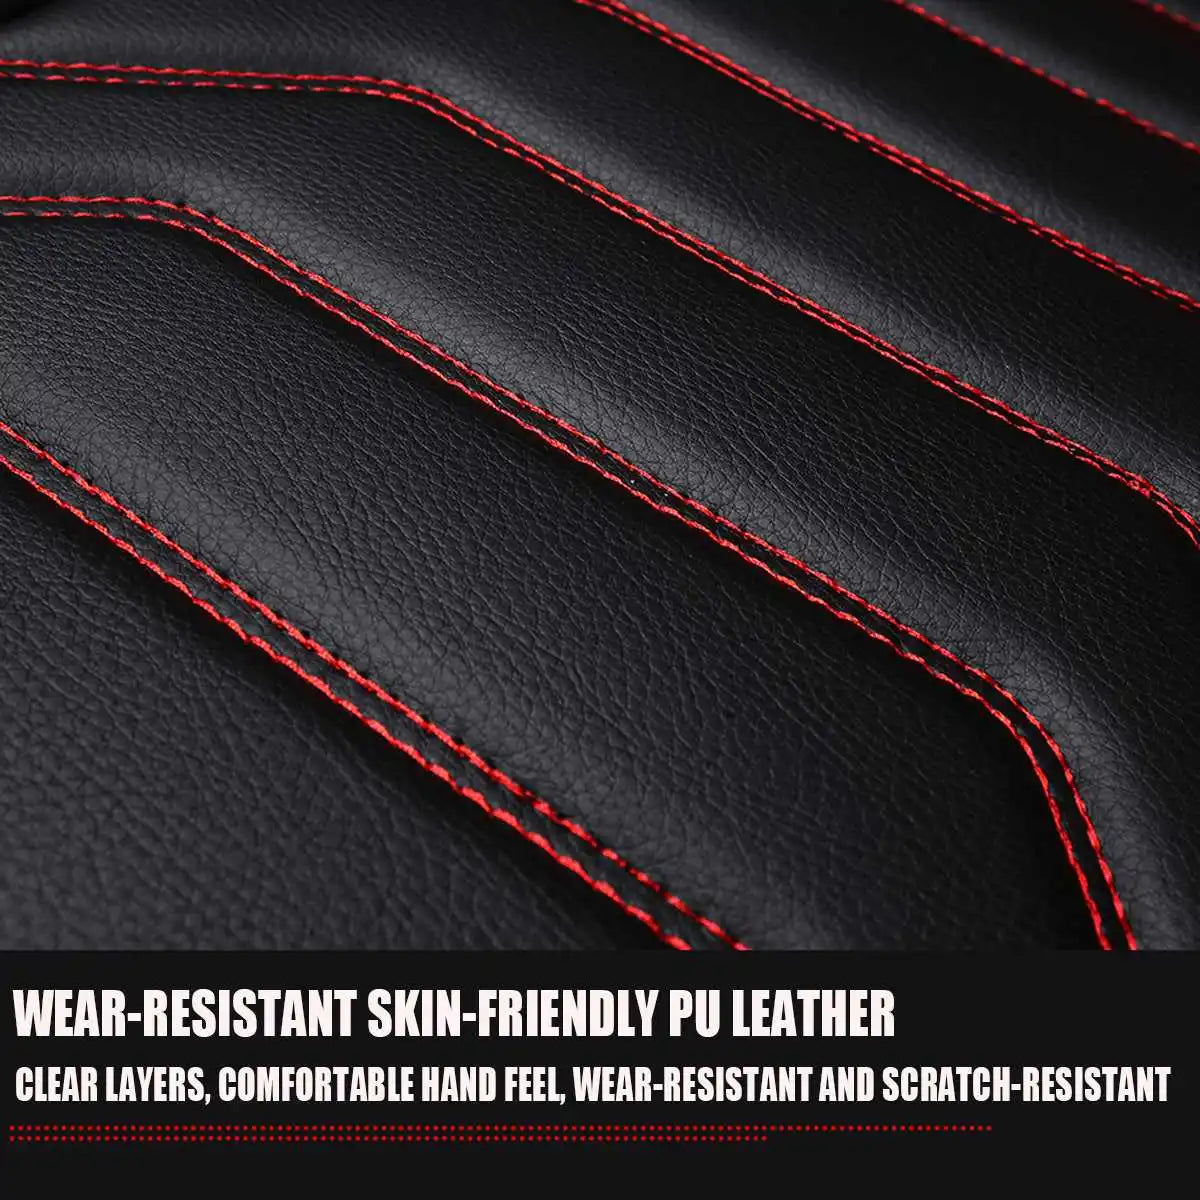 5 Seats Universal Car Seat Cover PU Headrest Waist Pillows 5D For Auto SUV - S & R Enterprises